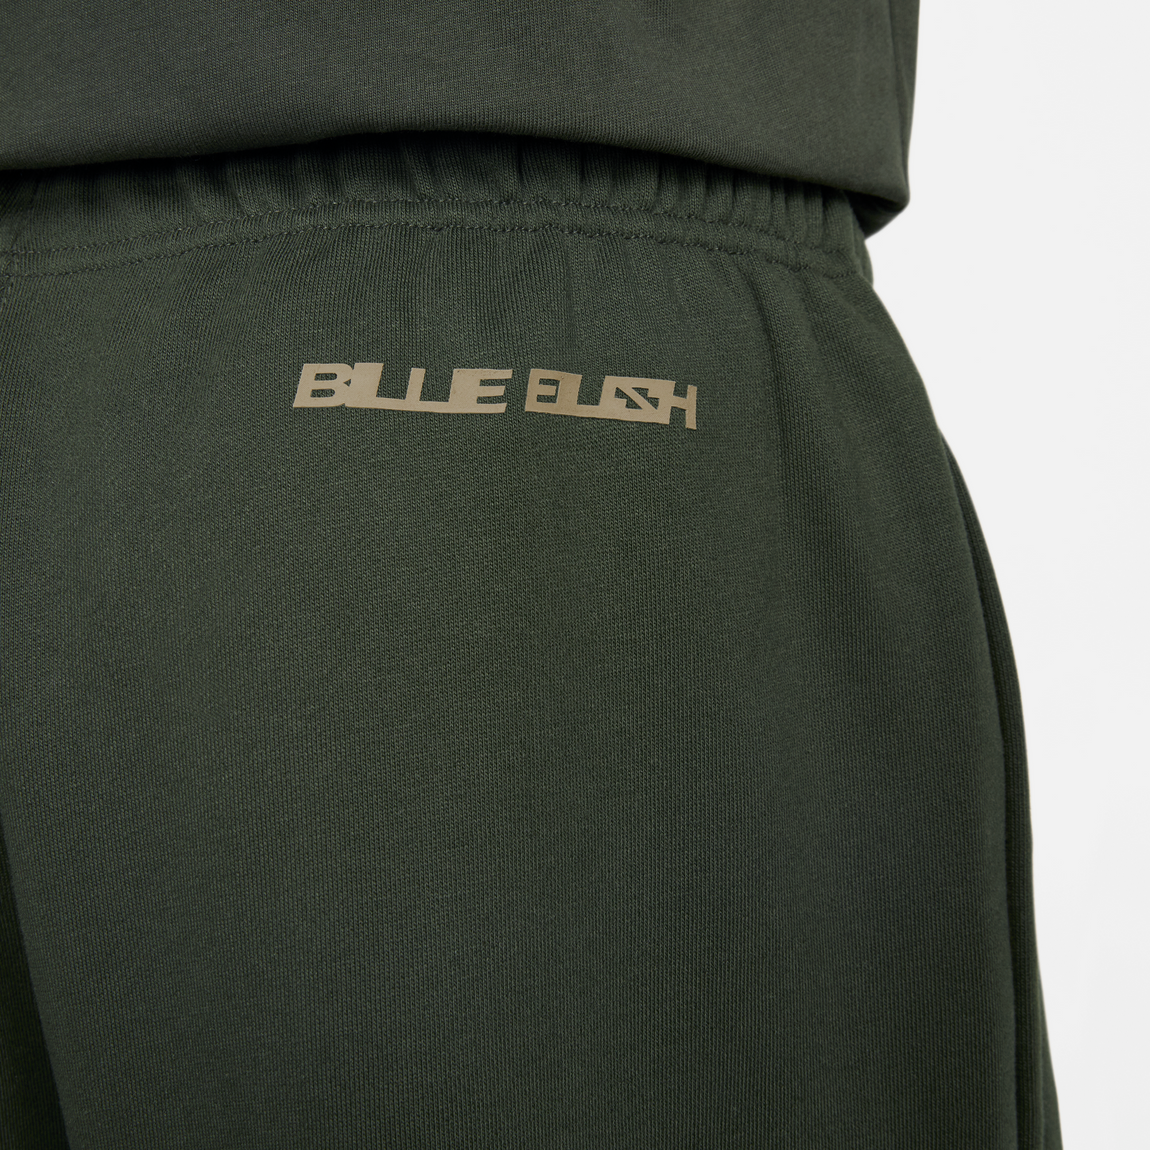 Nike x Billie Eilish Sweatpants (Sequoia/Mushroom) - Nike x Billie Eilish Sweatpants (Sequoia/Mushroom) - 